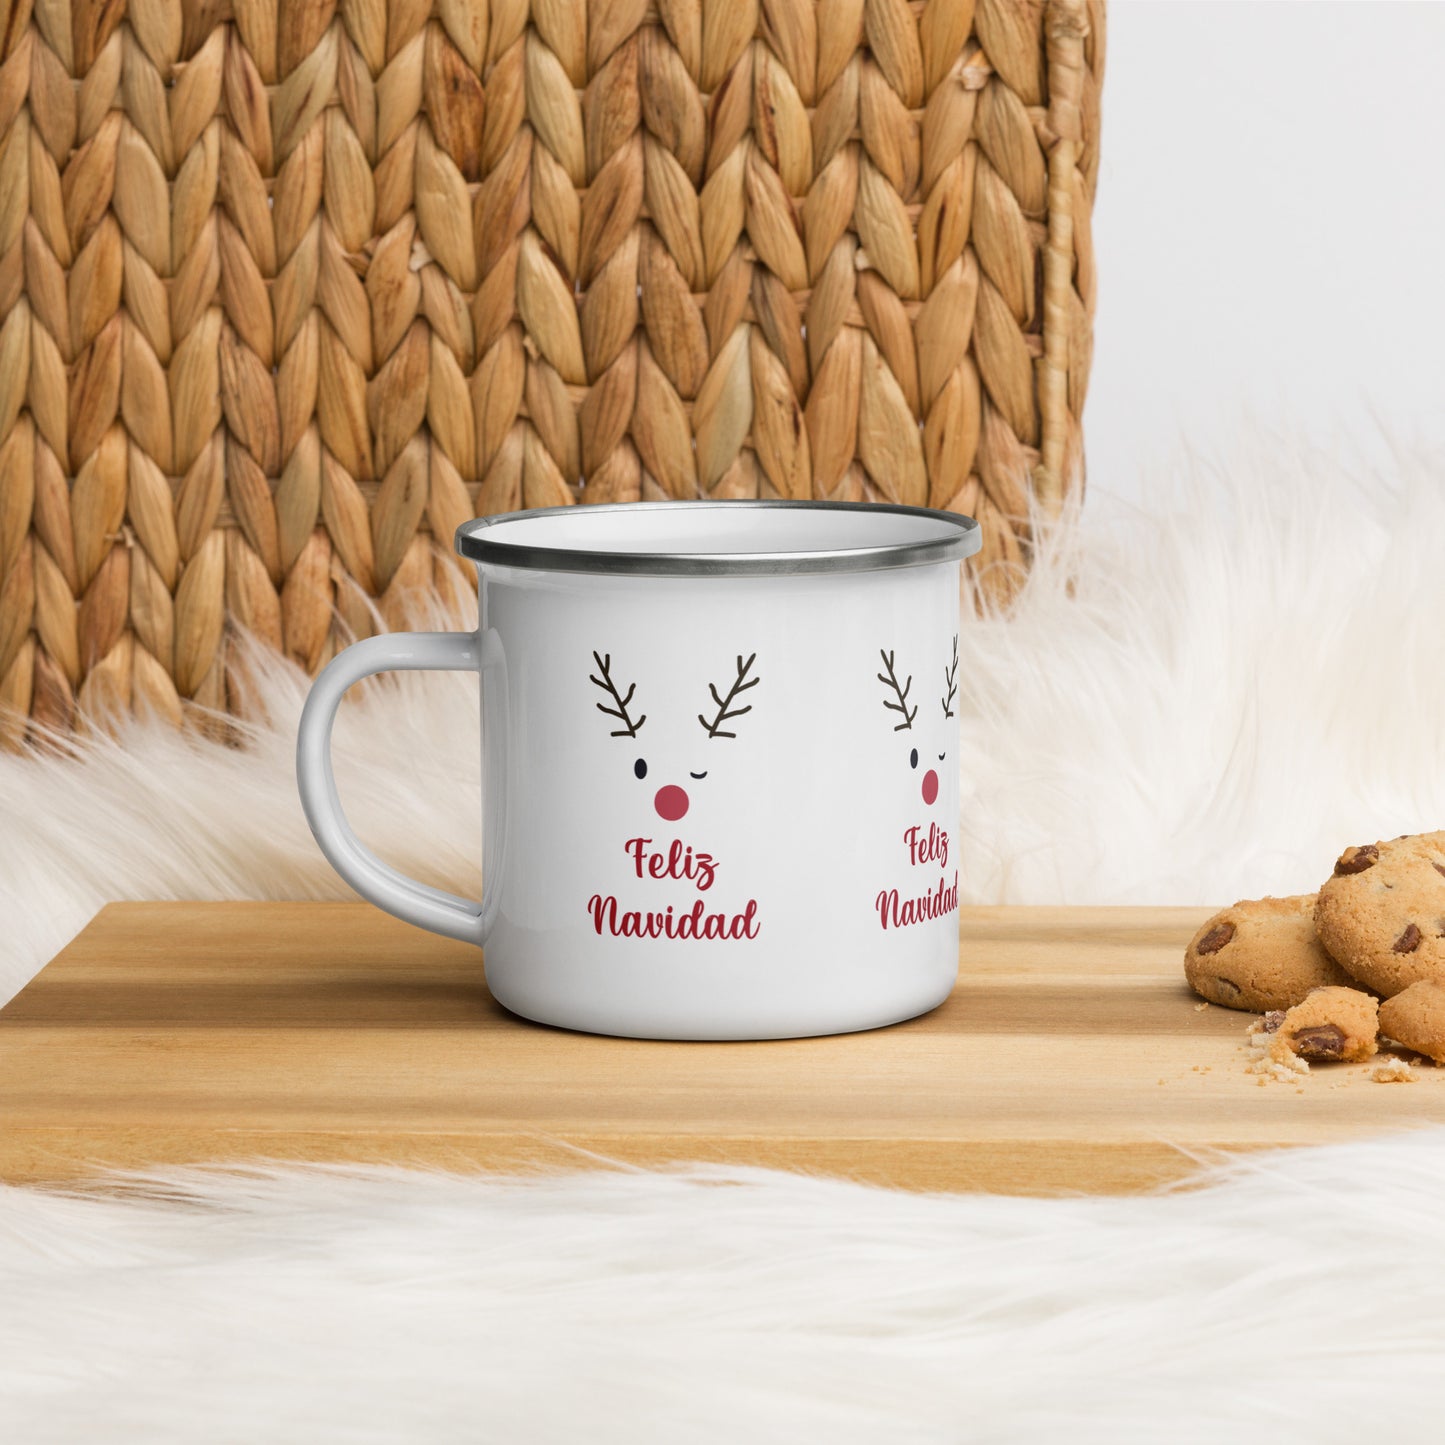 Rudolph the Reindeer Merry Christmas Mug